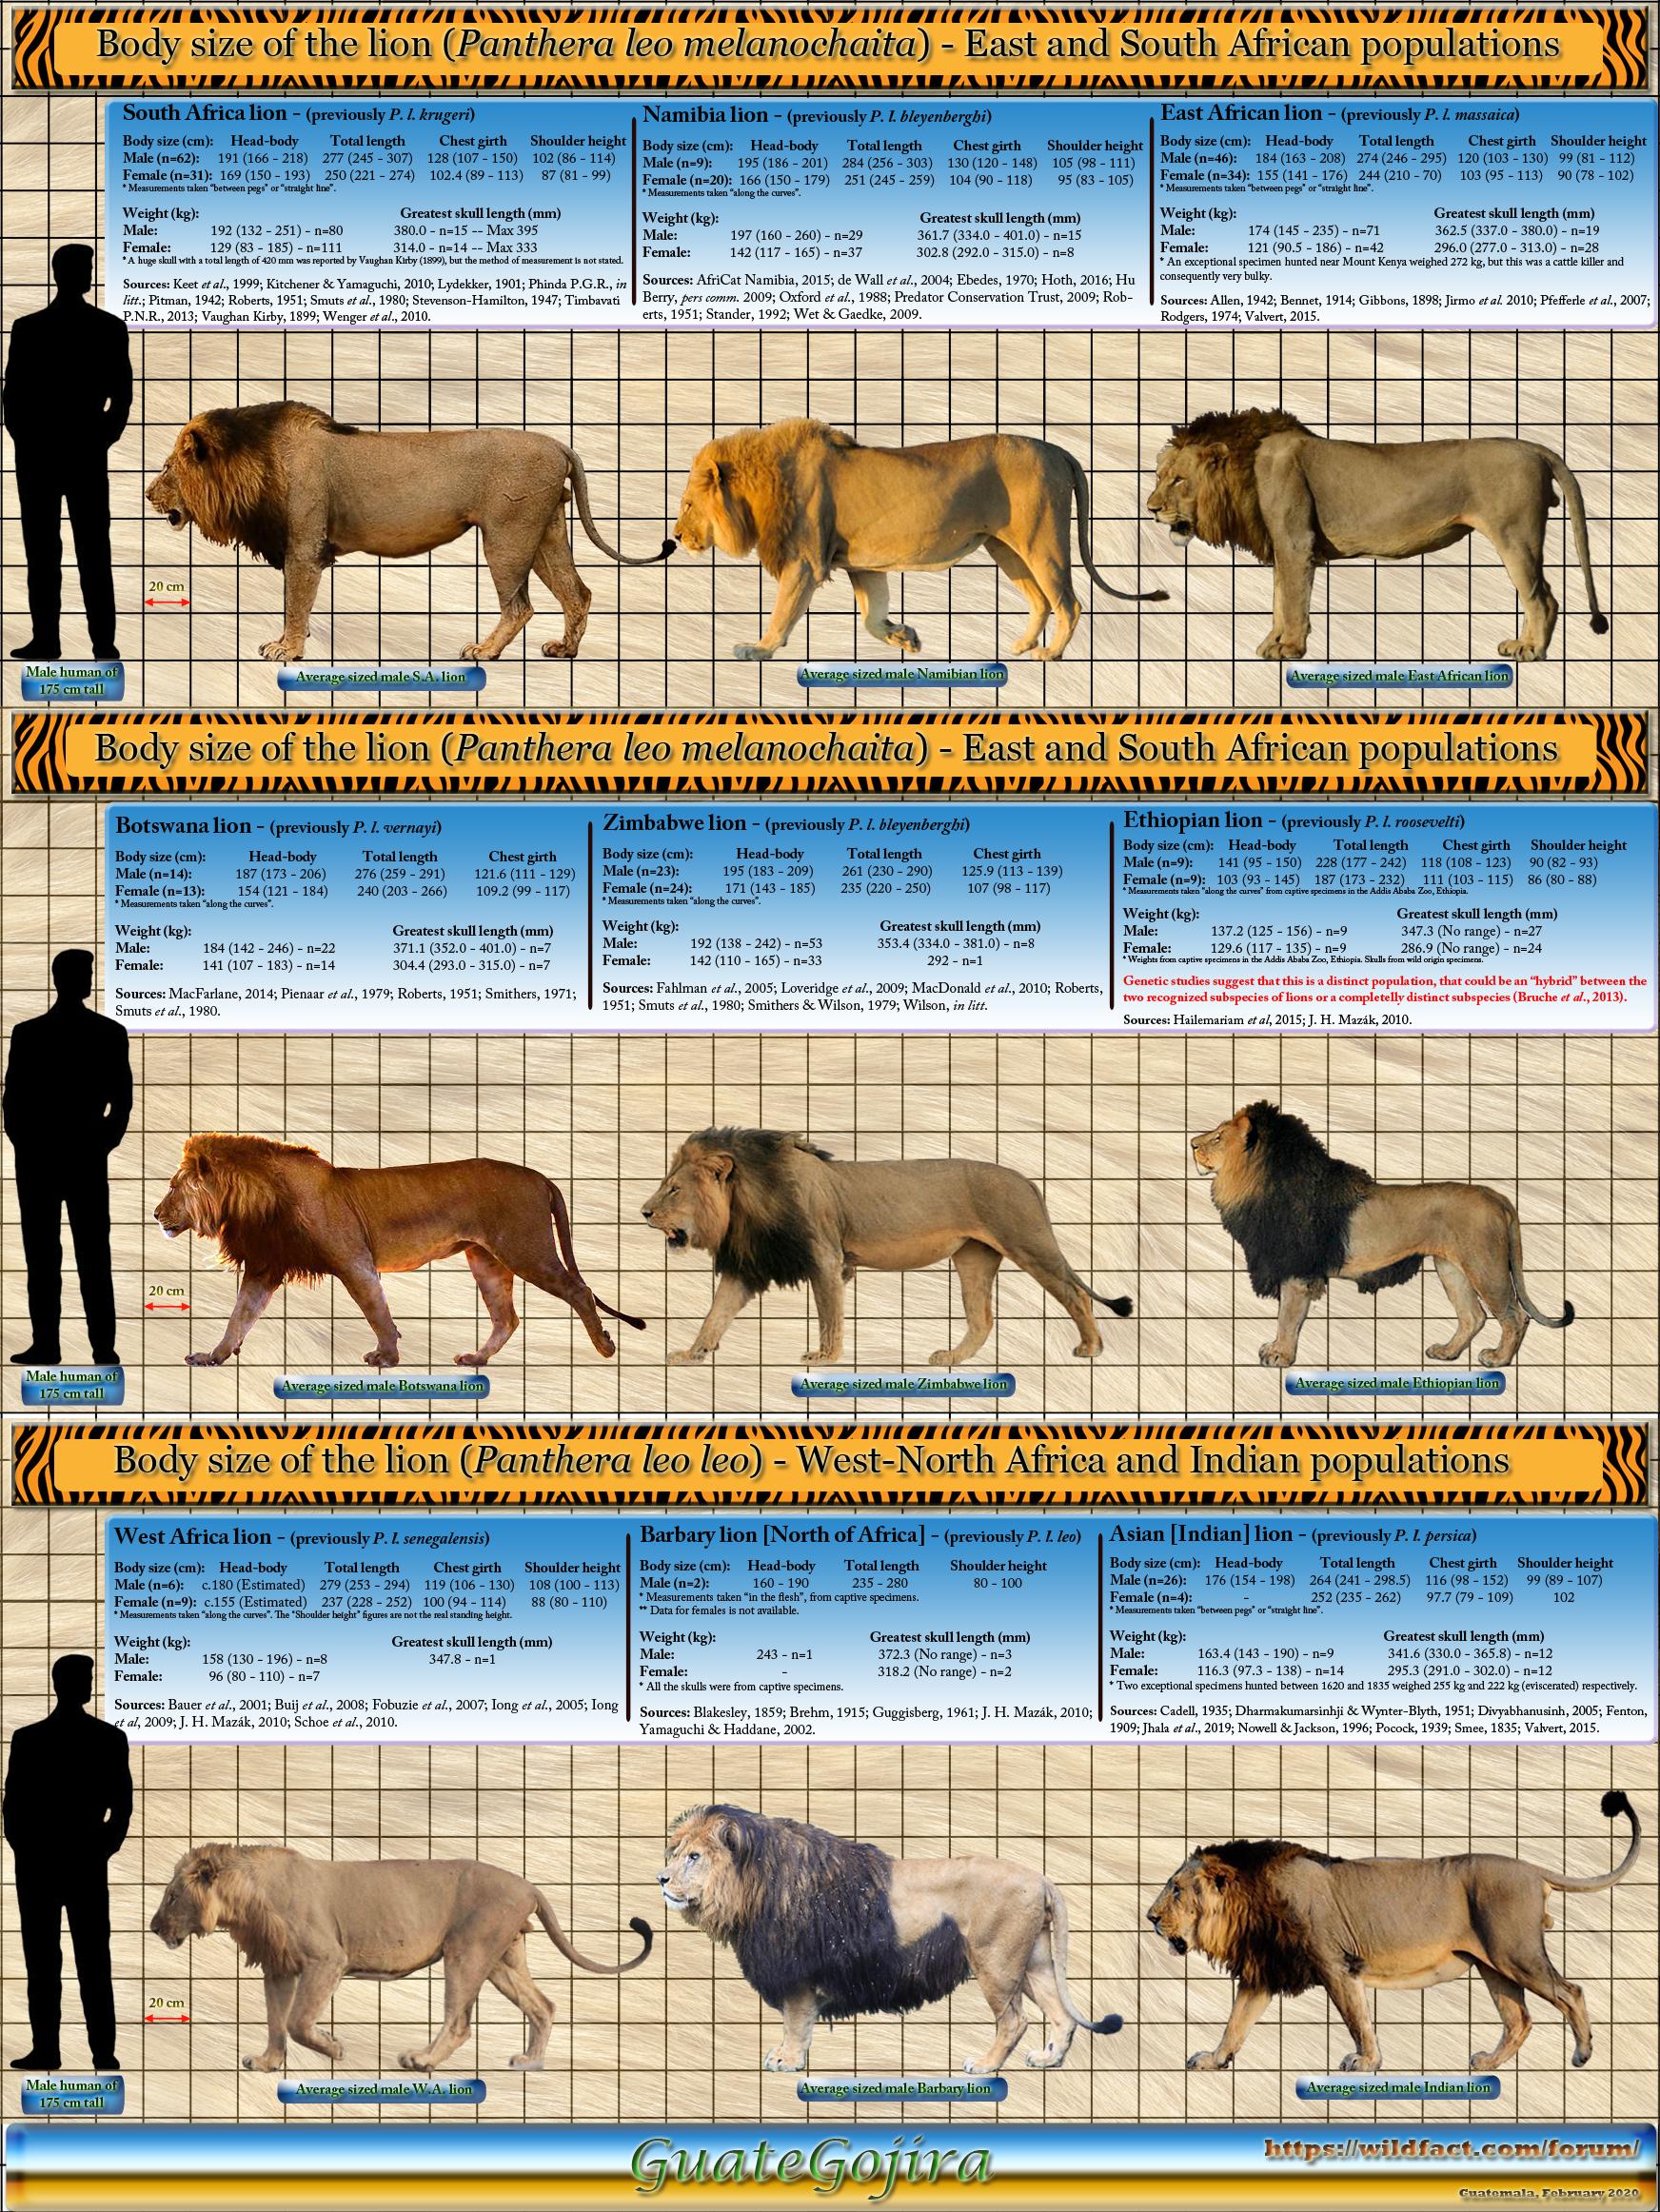 Animal Size Comparison | Frontier Forums